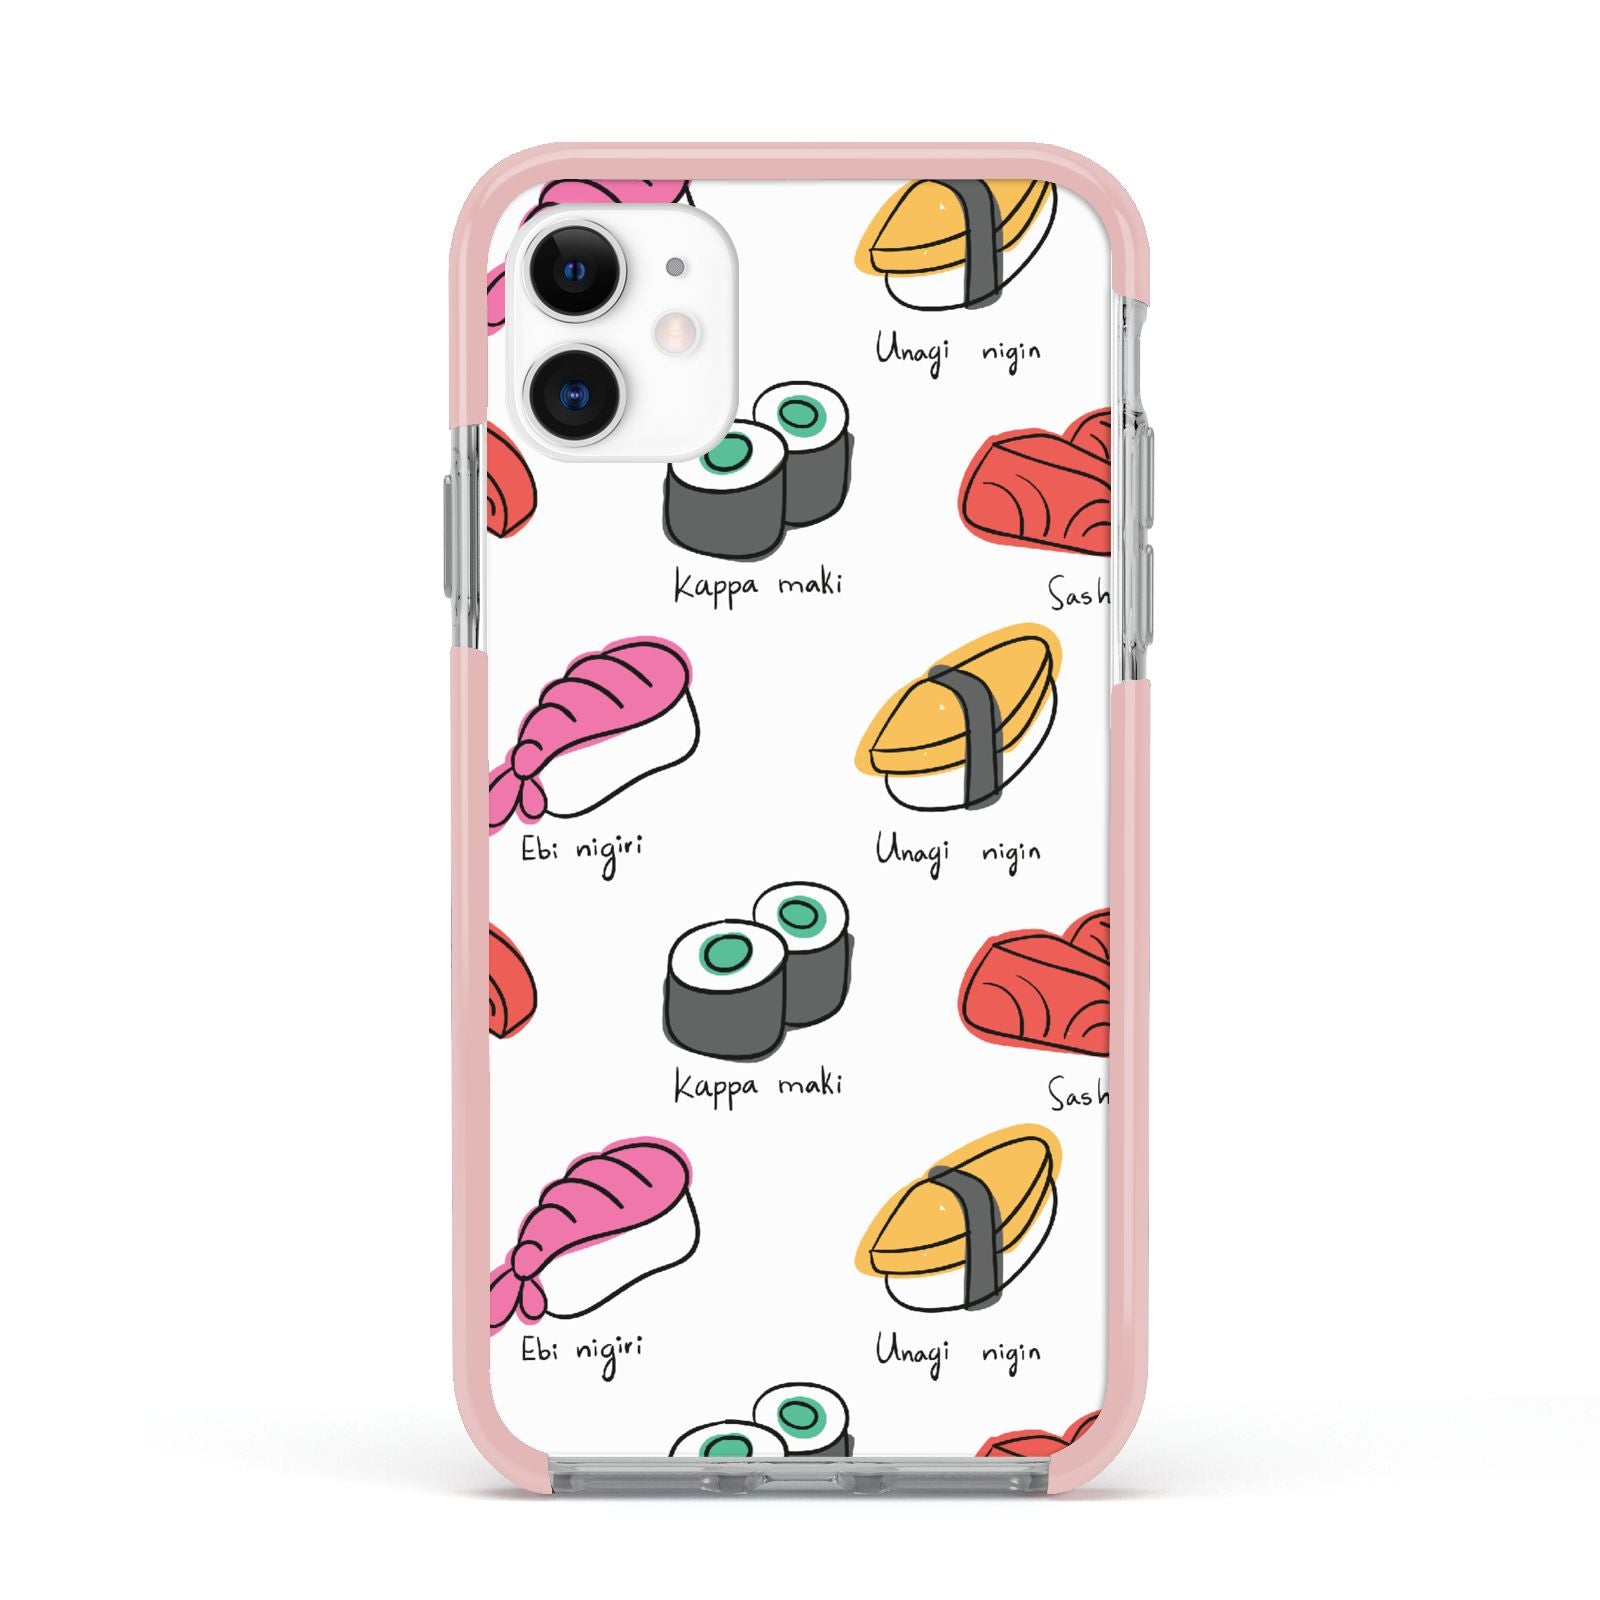 Sashimi Kappa Maki Sushi Apple iPhone 11 in White with Pink Impact Case